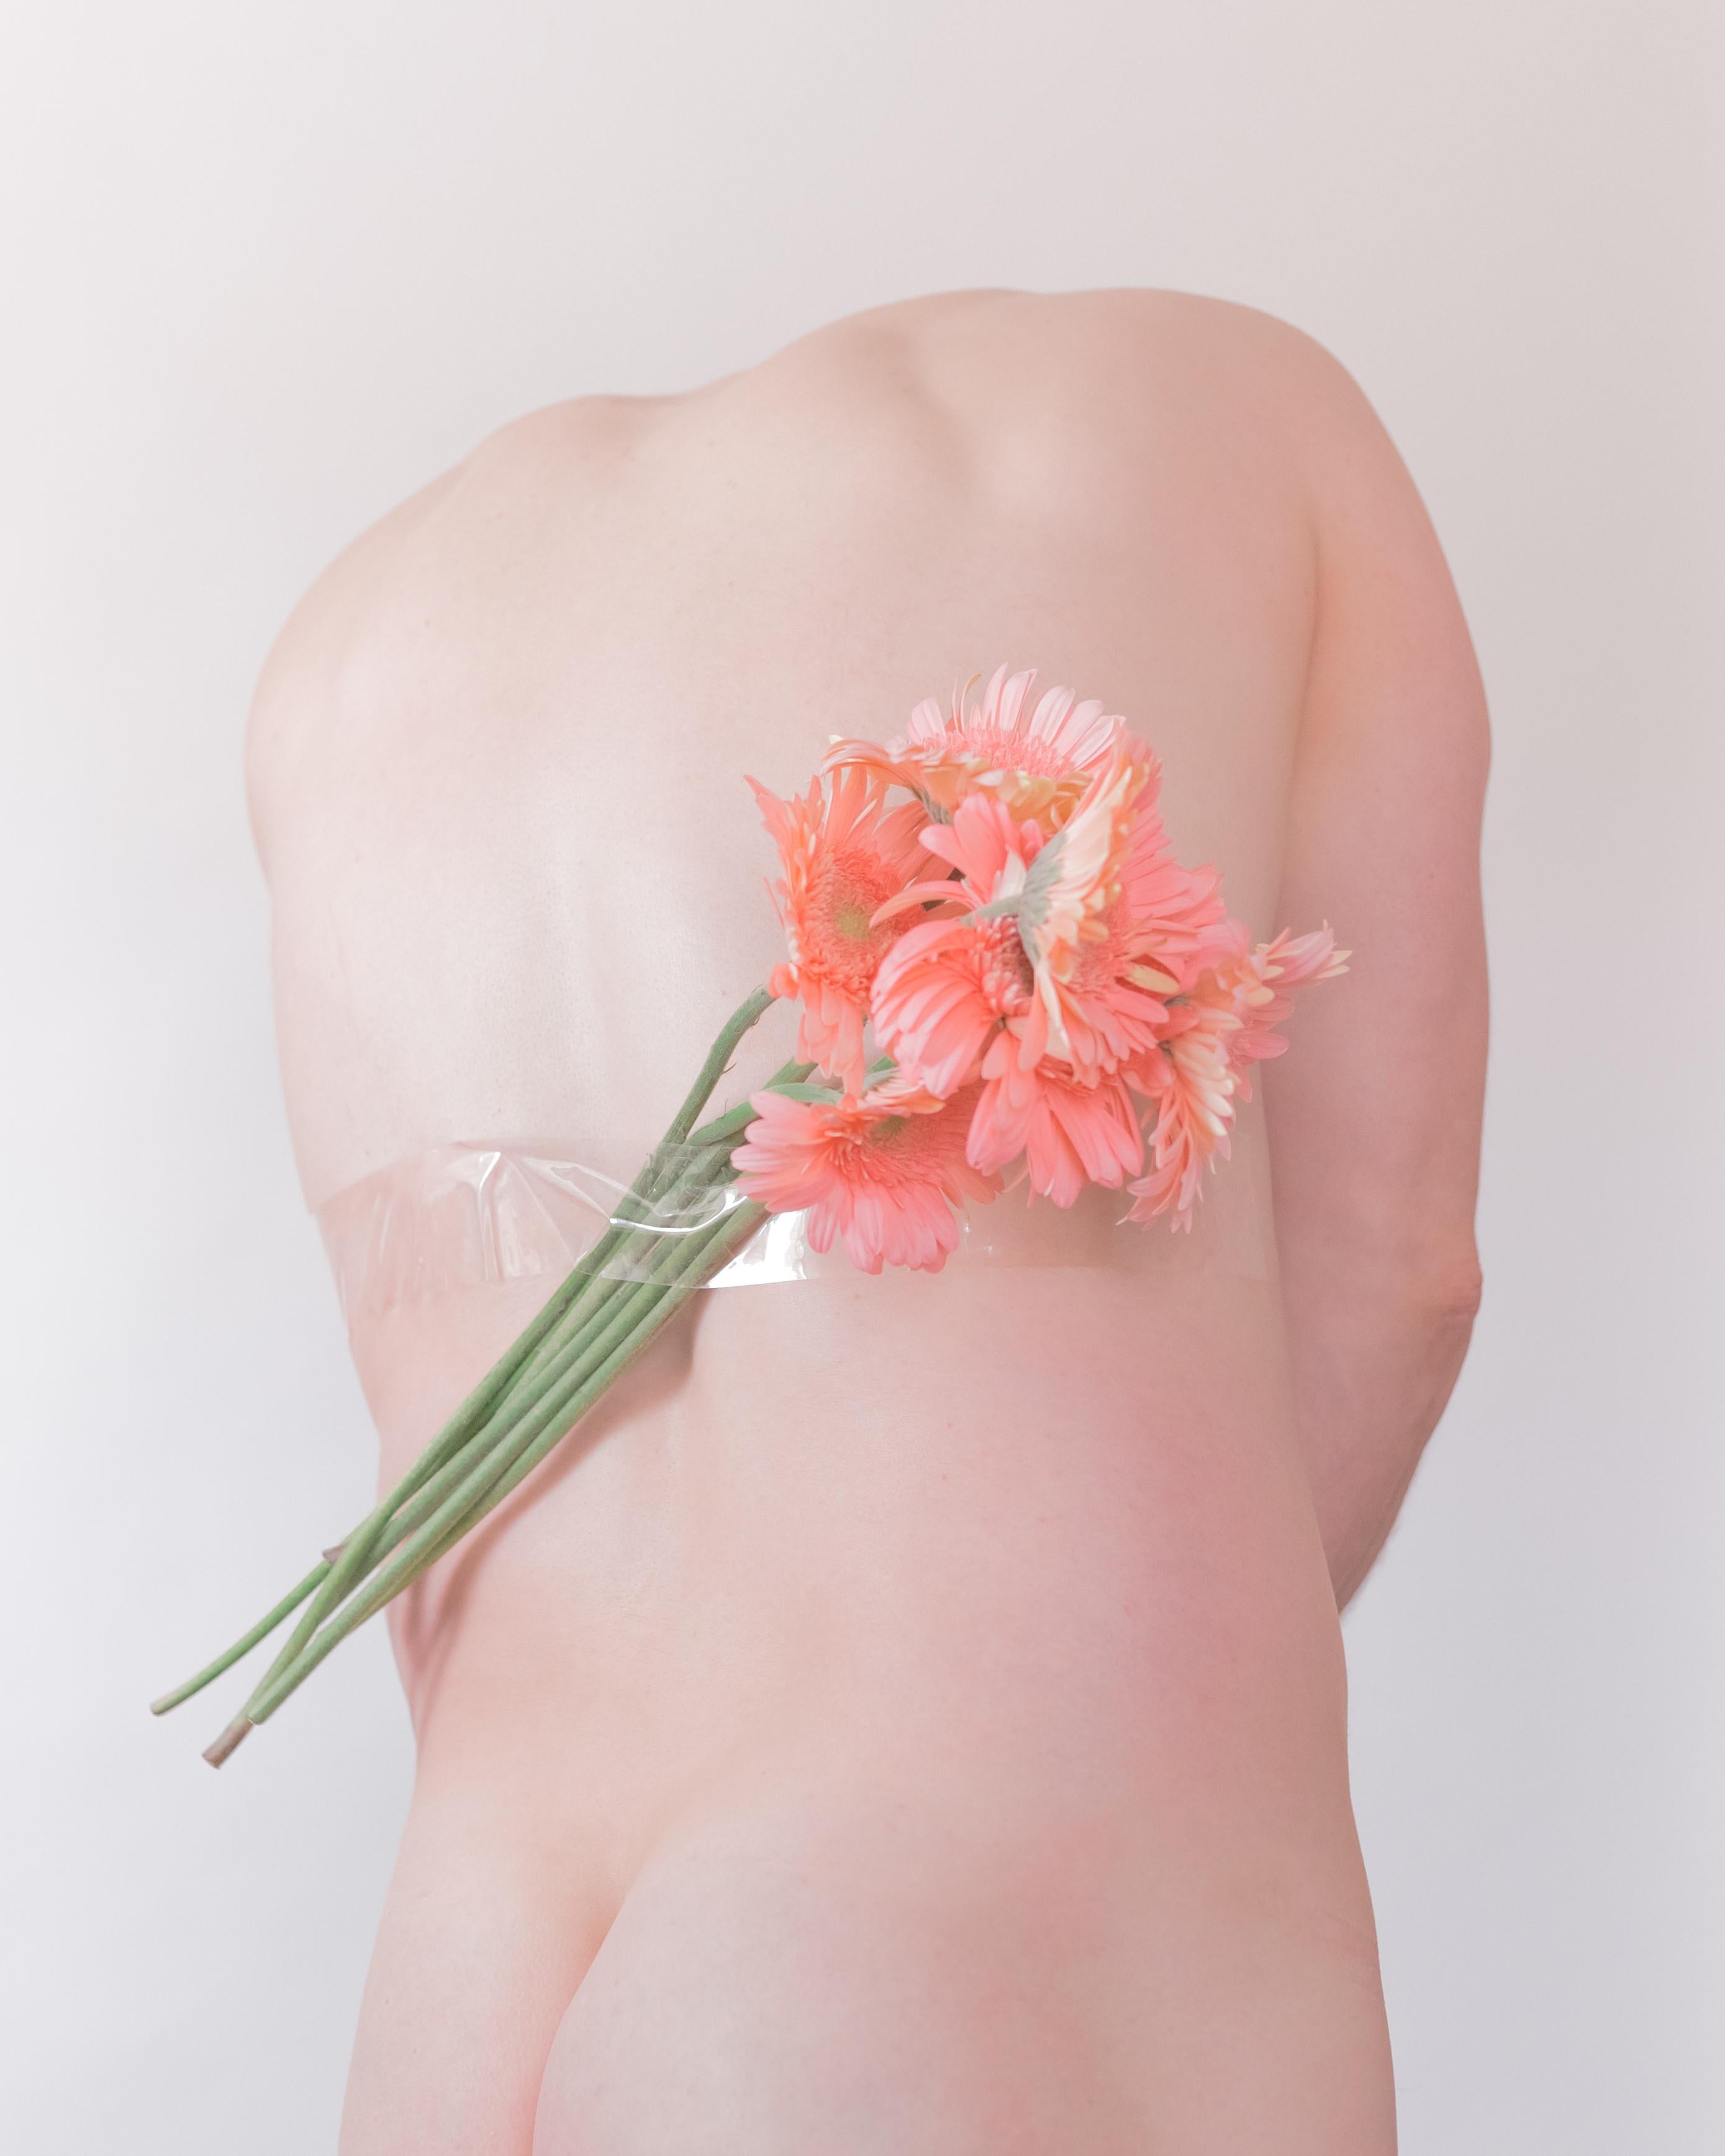 David Pugh Portrait Photograph – Tape (Male, Back, Flowers, Pink, Rose, Soft, Portrait, Stillleben, Nude, Tape)